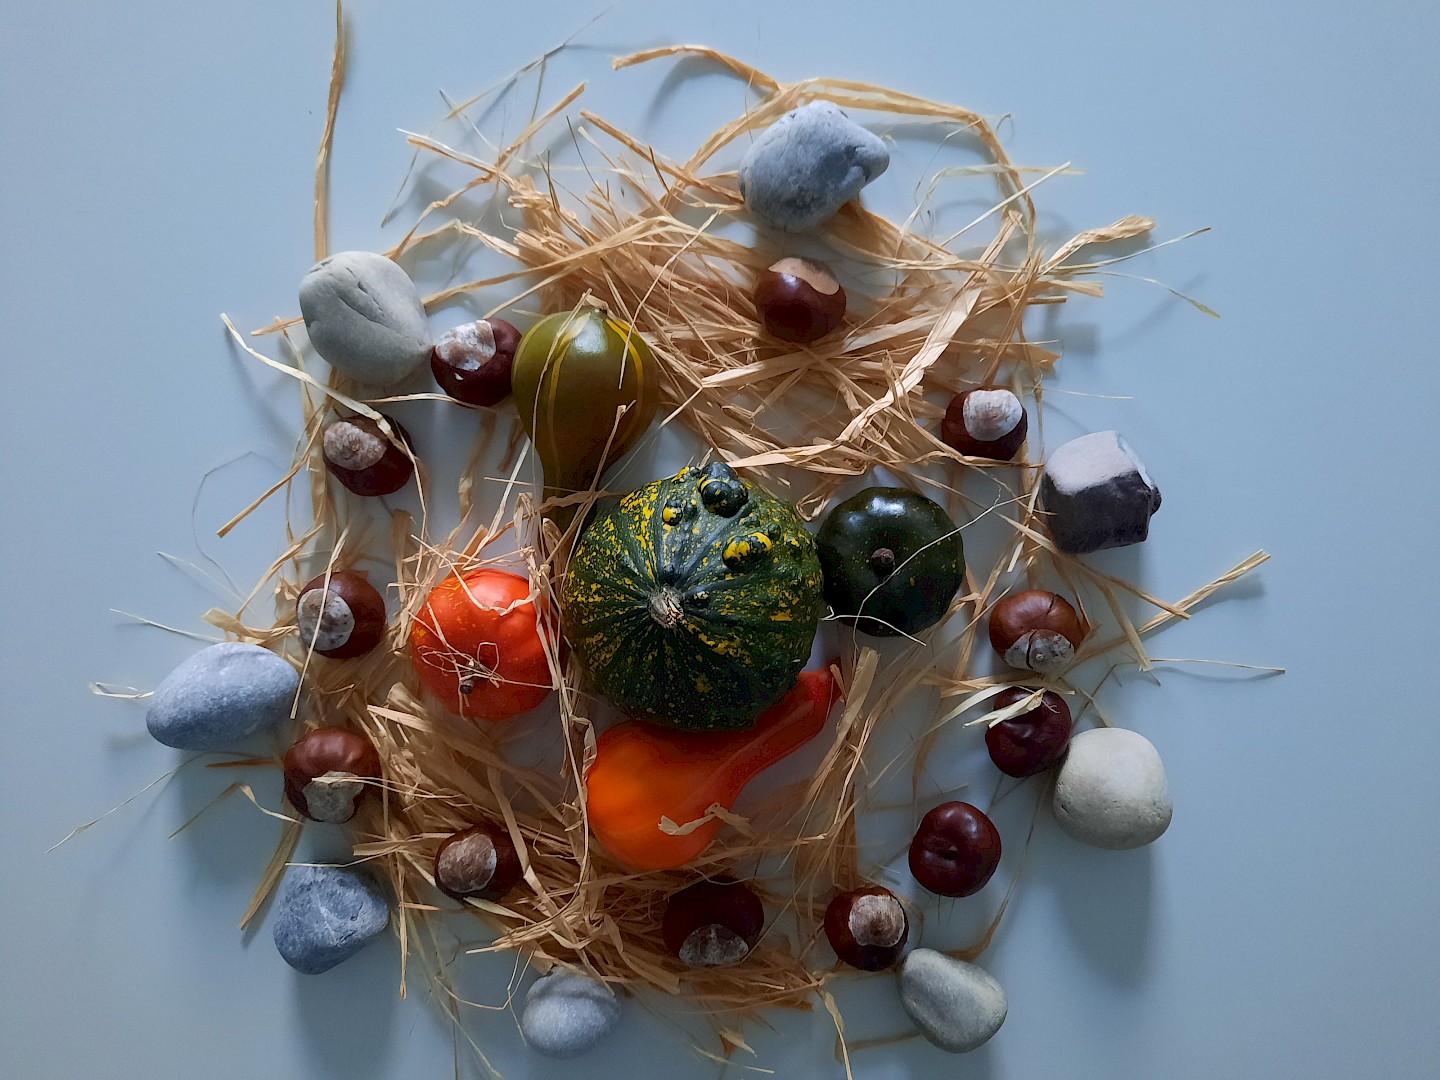 Mandala made of raffia, stones and ornamental gourds.
Rosine Lambin, 2022